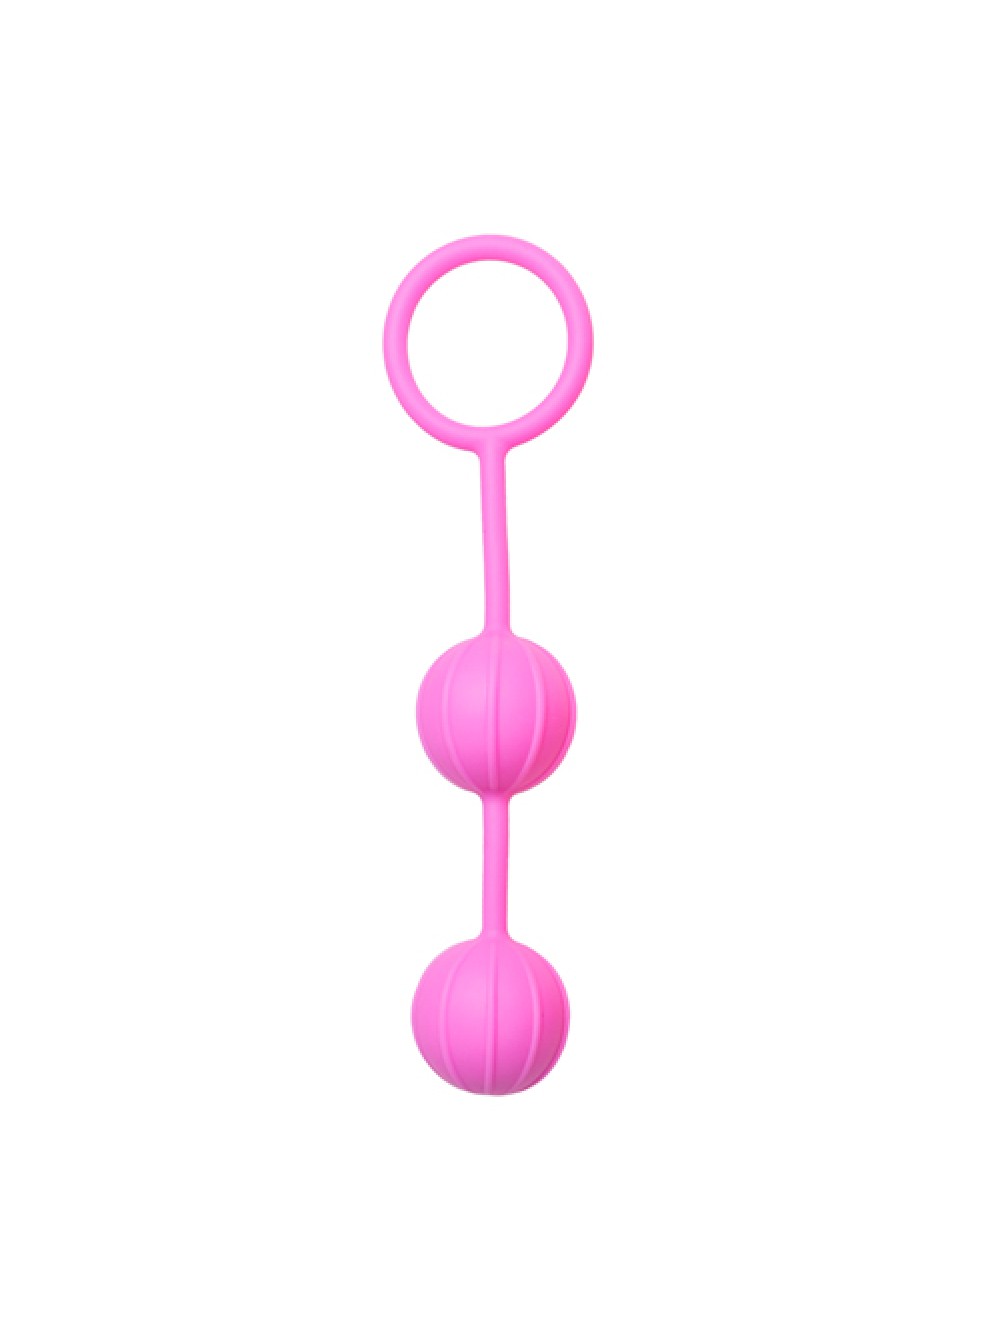 Easytoys Vertical Ribbed Geisha Balls - Pink